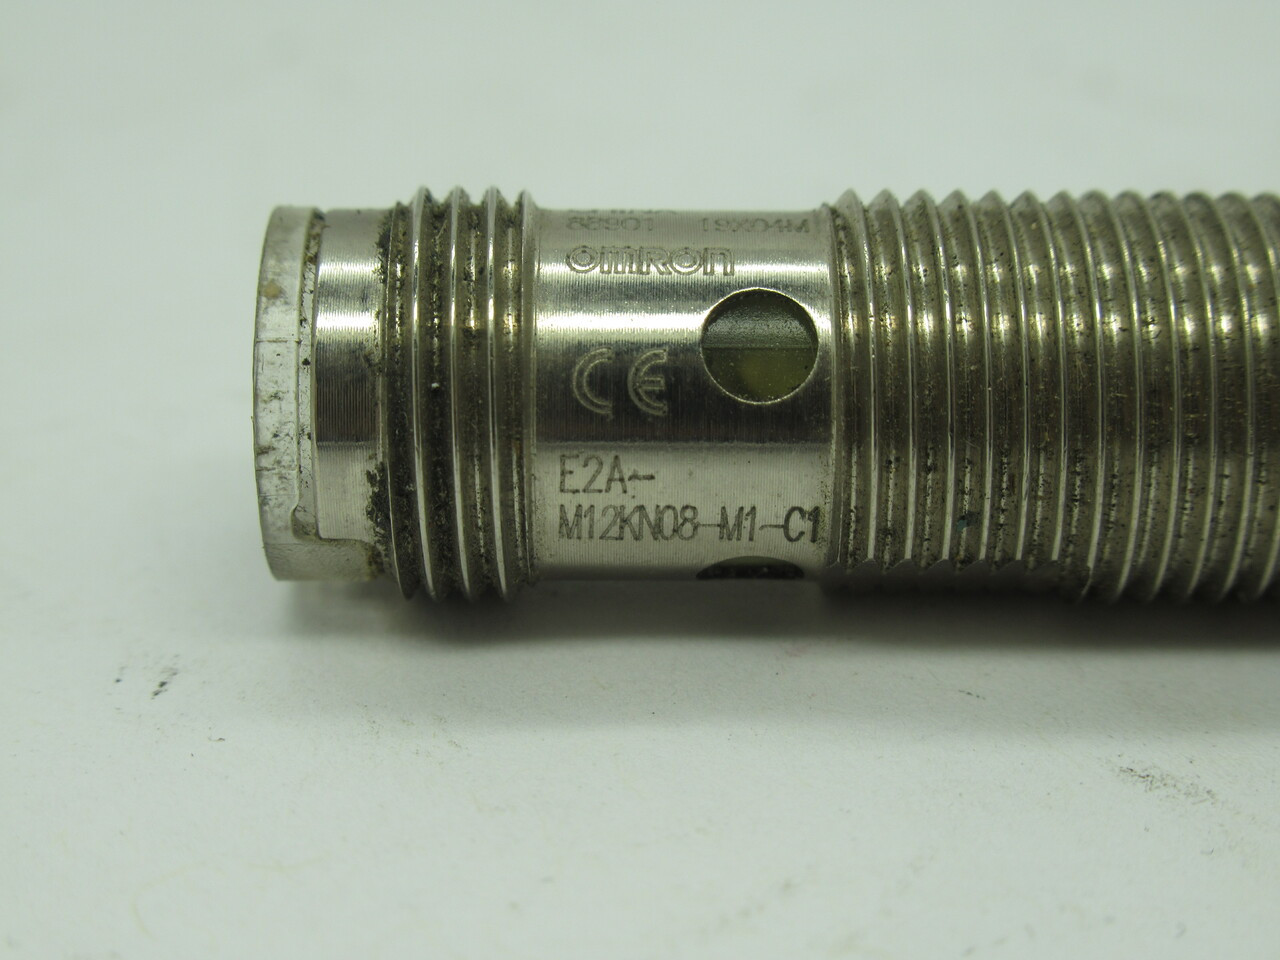 Omron E2A-M12KN08-M1-C1 Proximity Sensor M12 10-30VDC 200mA 8mm NO HARDWARE USED